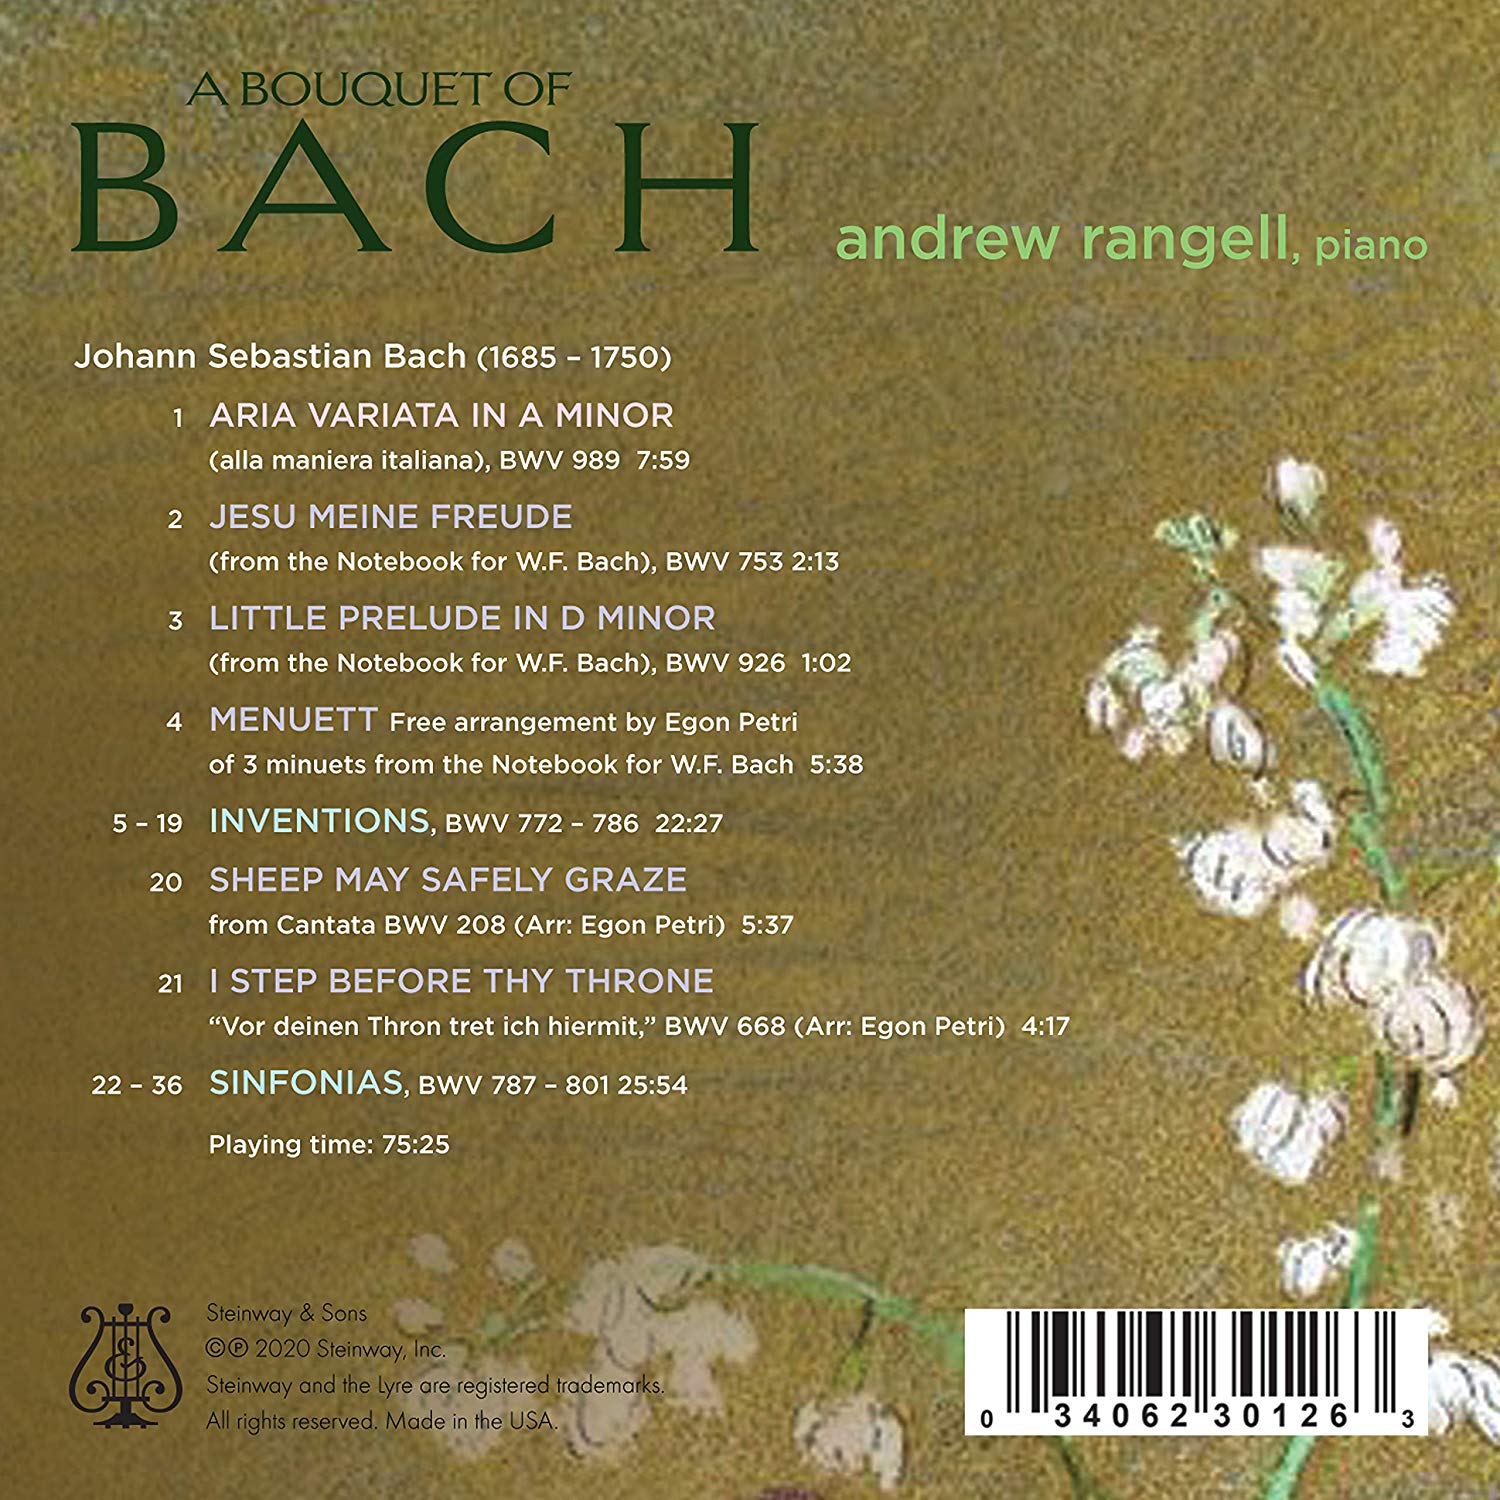 Andrew Rangell 바흐: 인벤션과 신포니아 등 (A Bouquet of Bach)